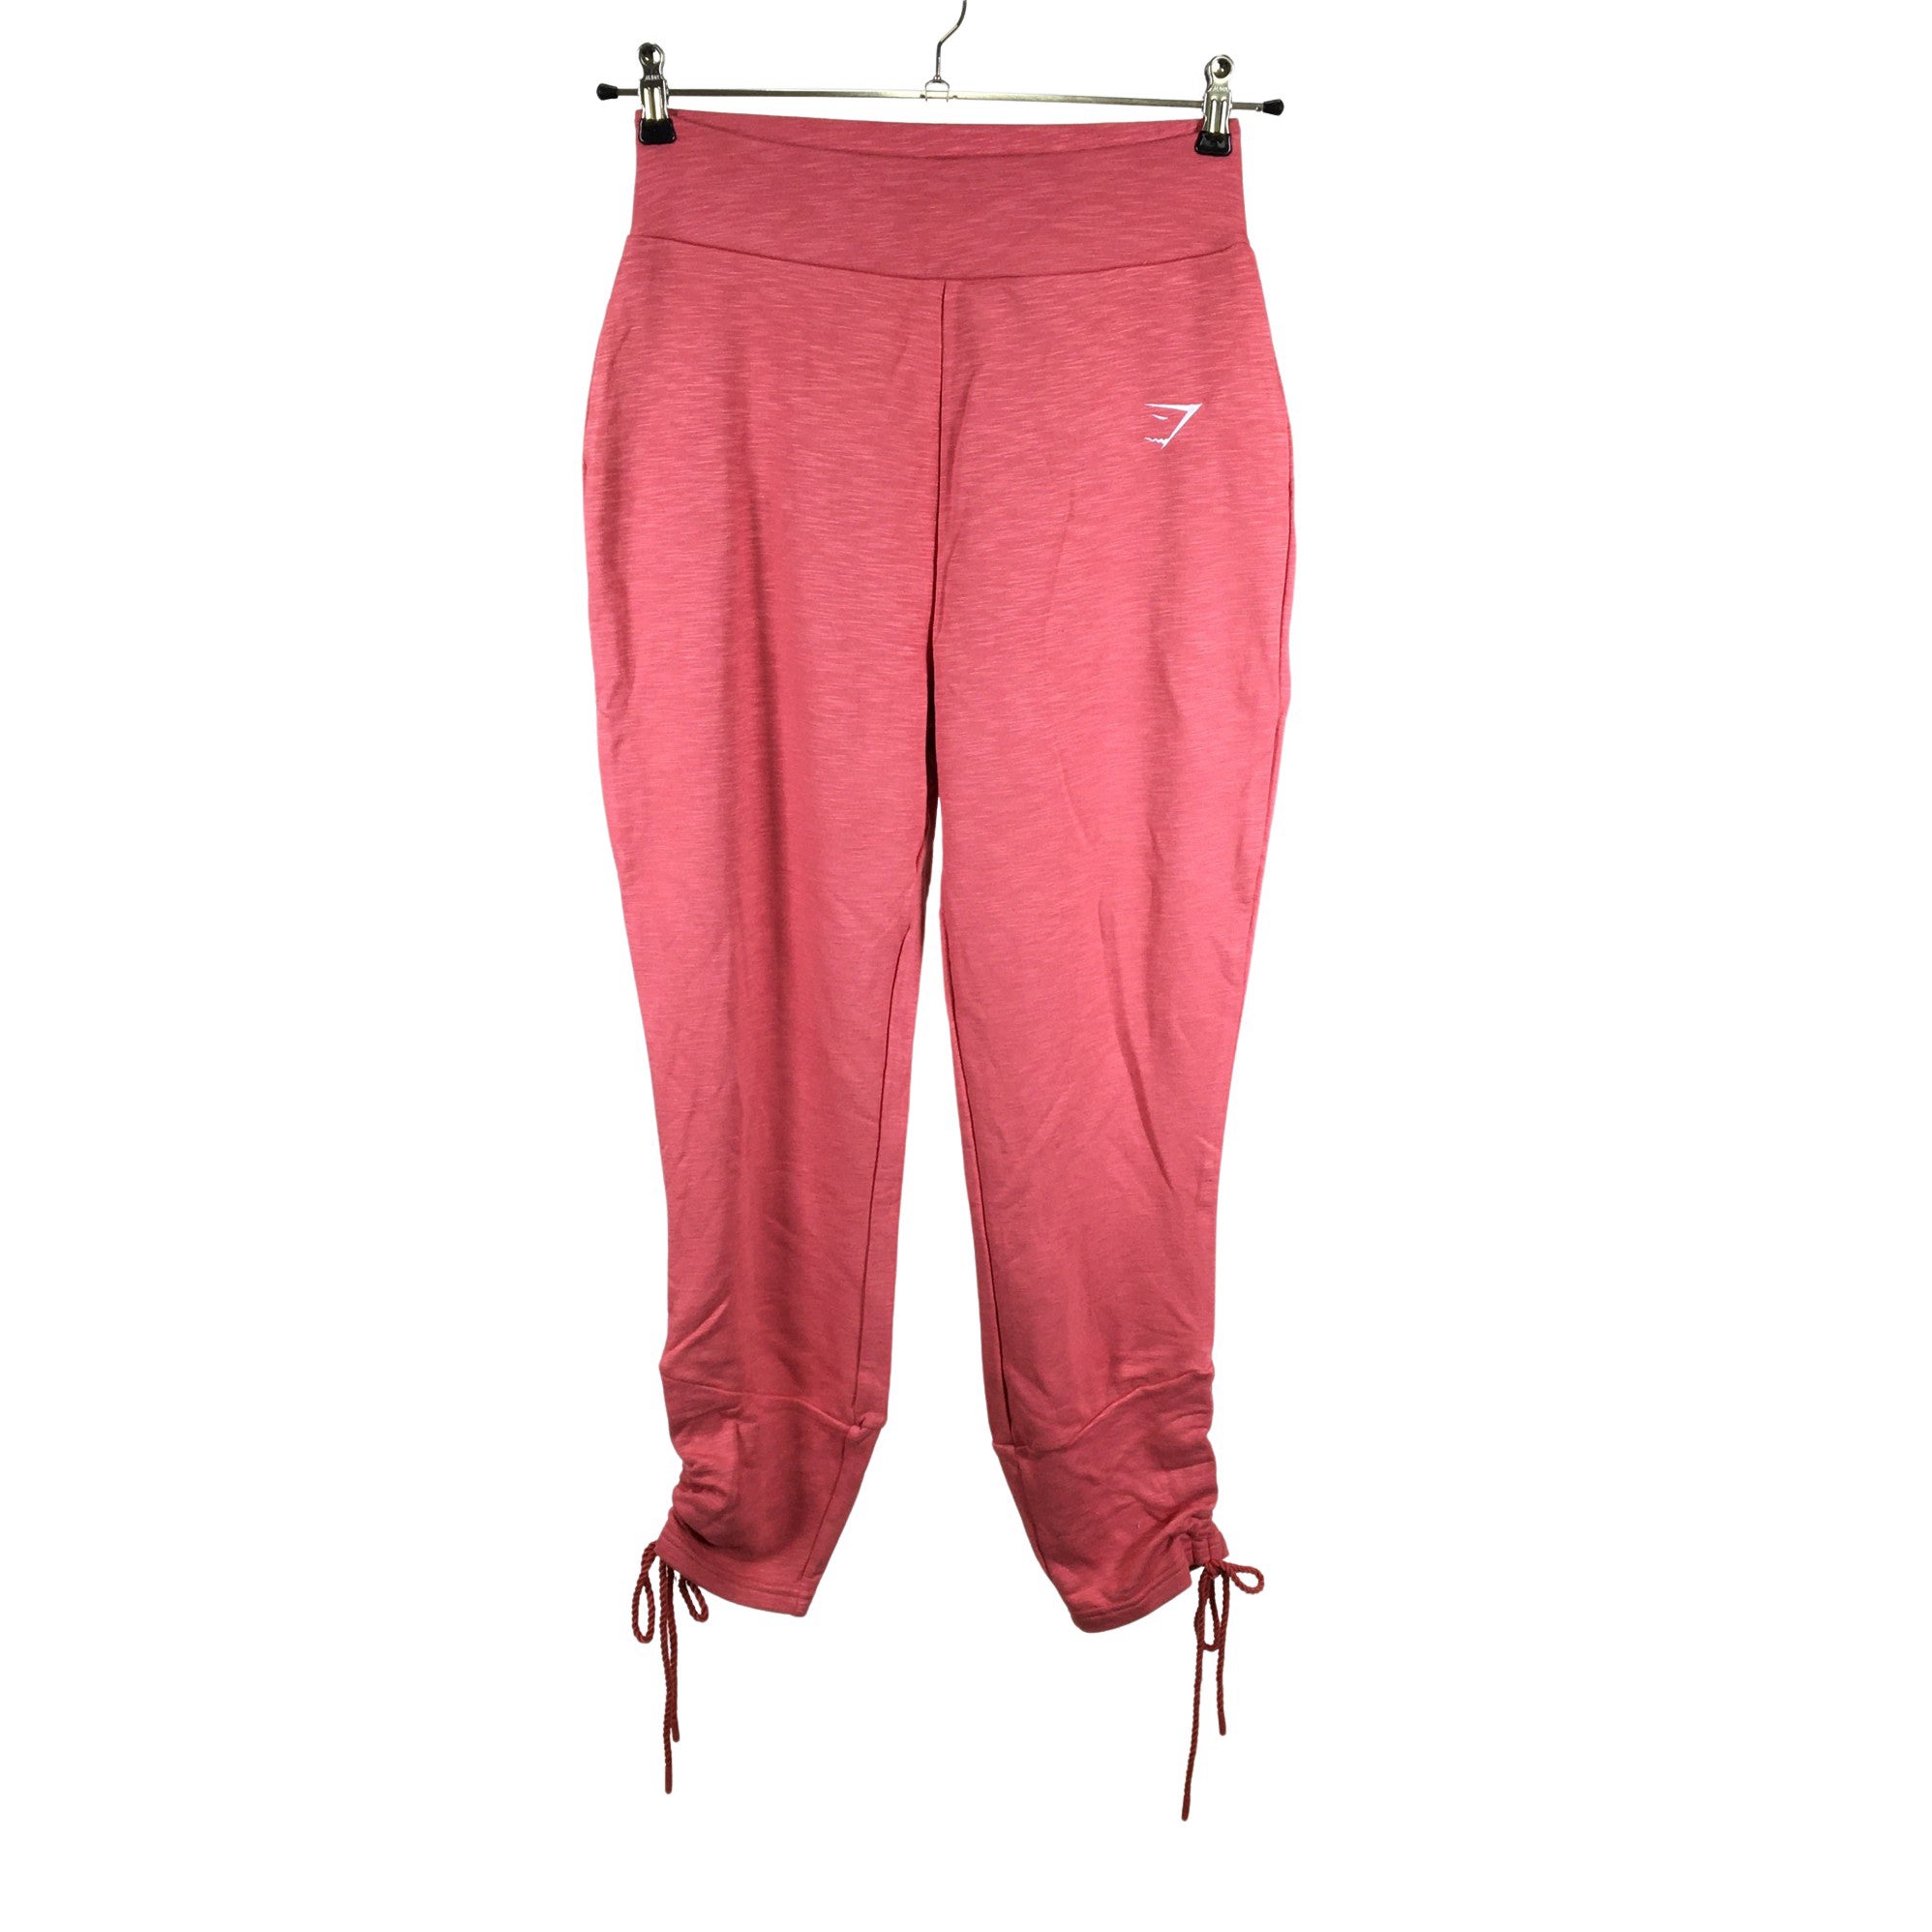 Women's Gymshark Sweatpants, size 38 (Light red)